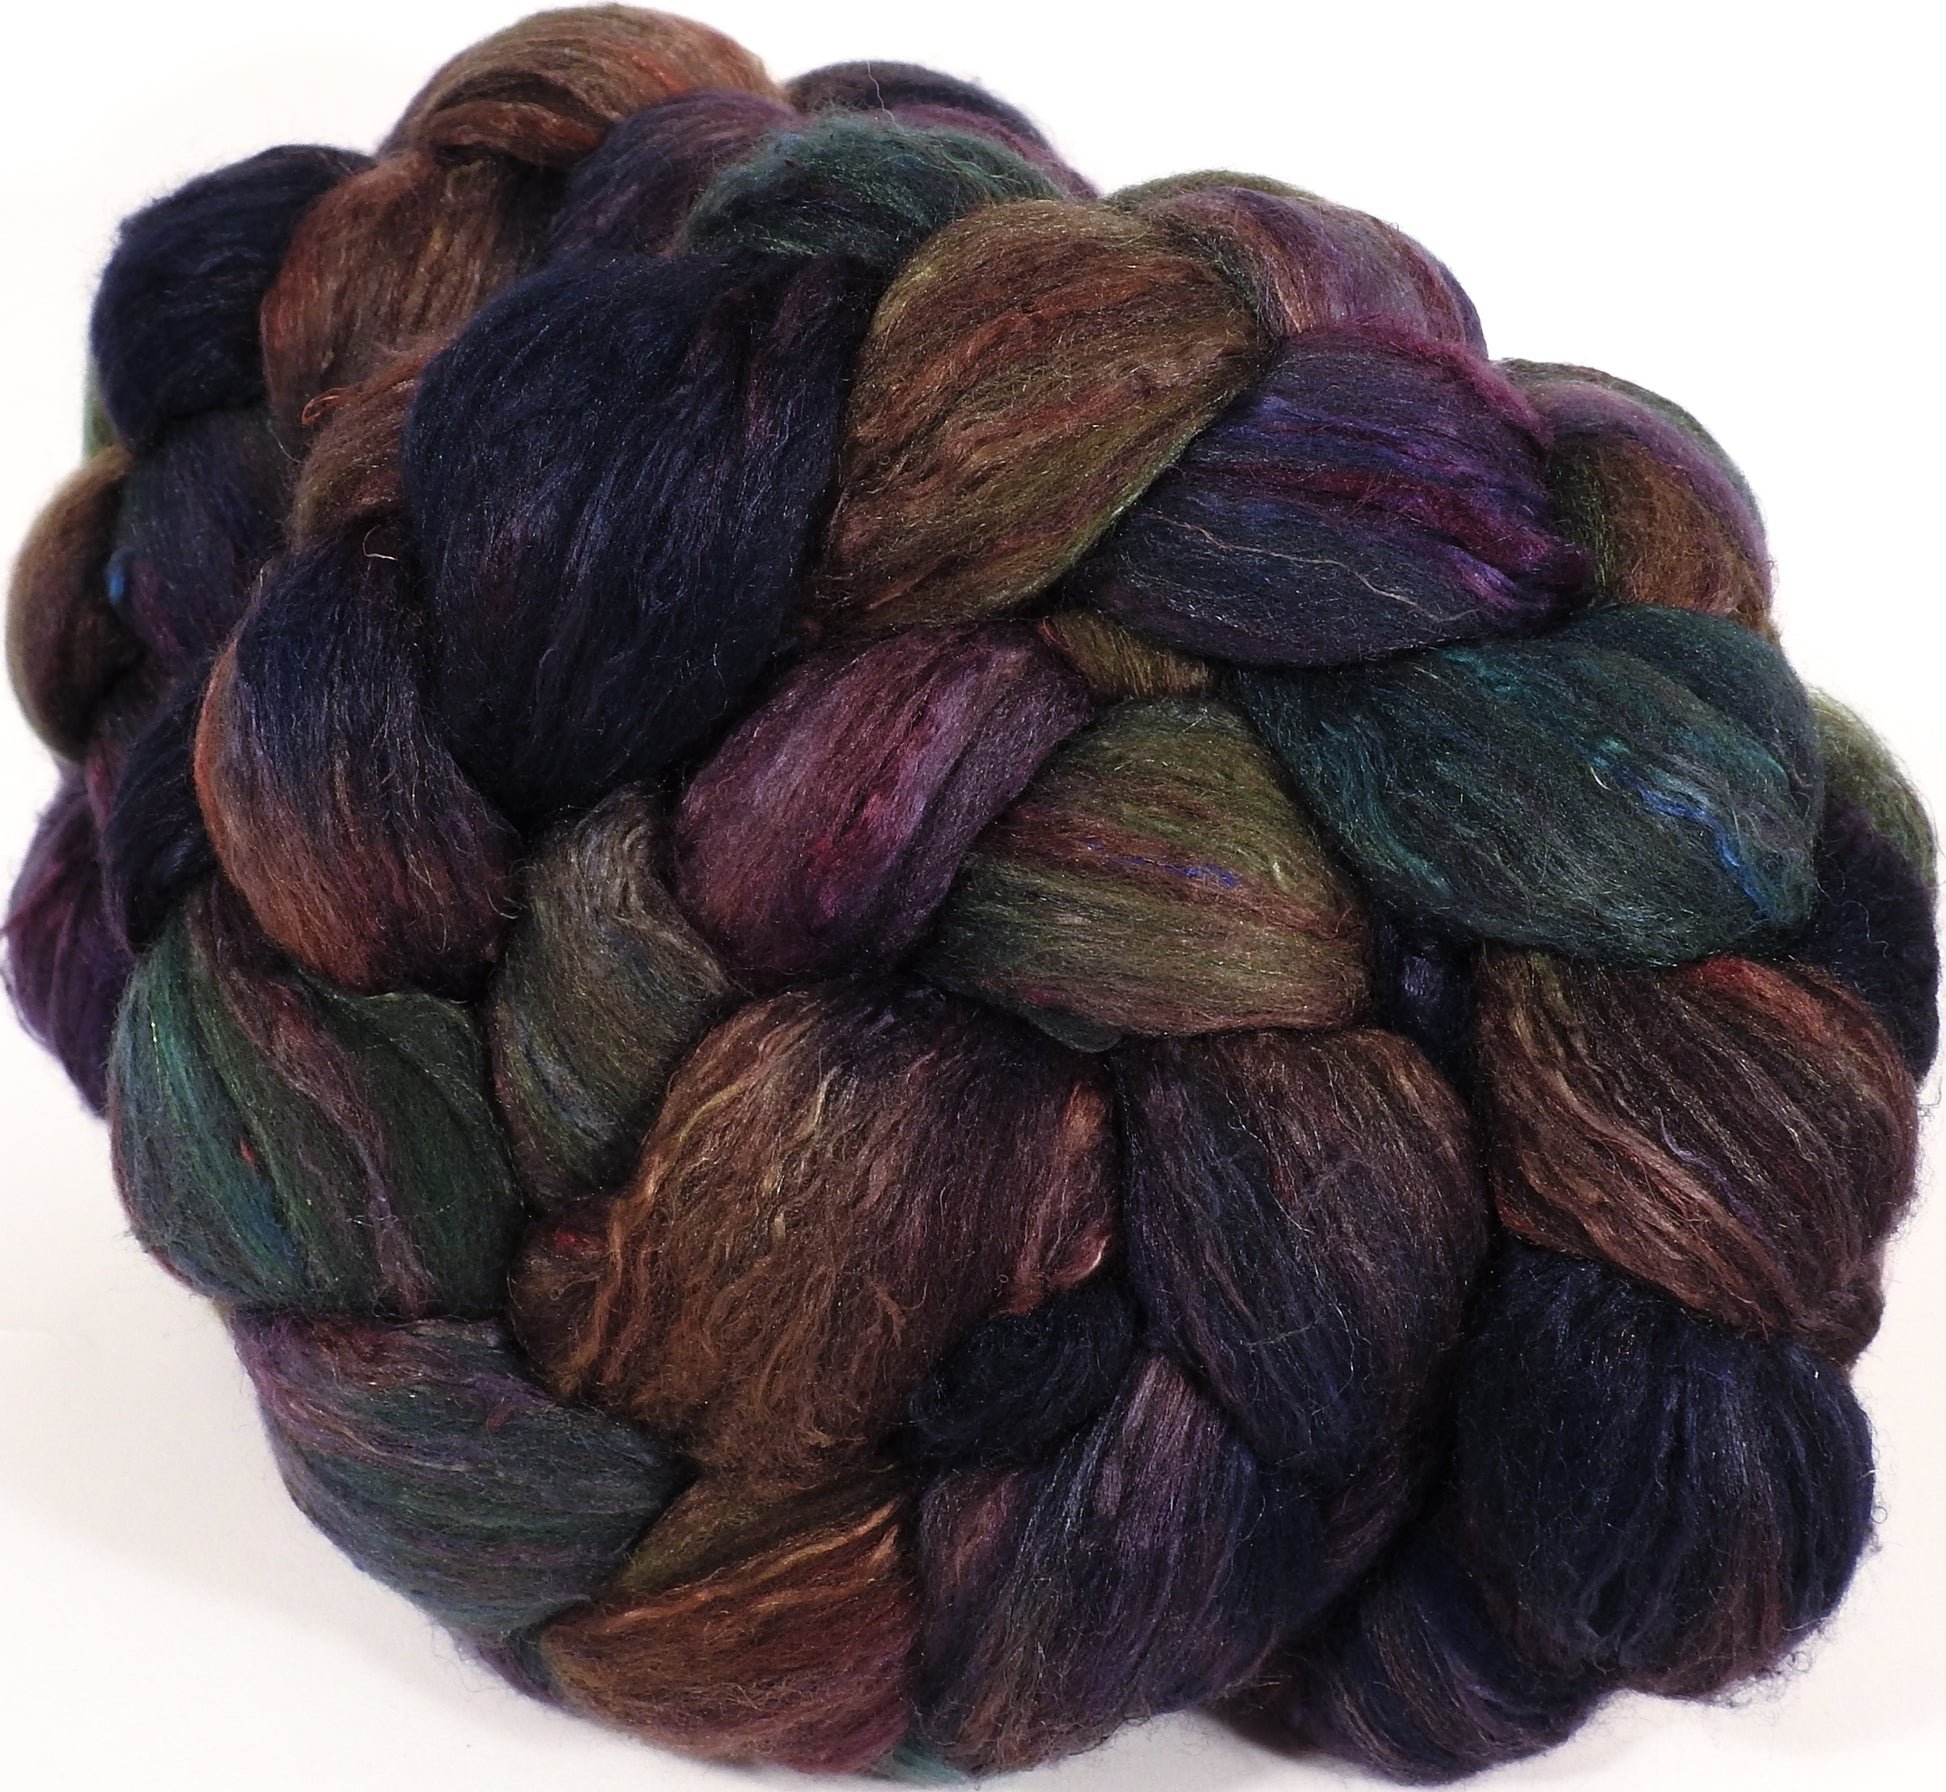 Batt in a Braid #39-SARI-19-(4.55 oz.)Falkland Merino/ Mulberry Silk / Sari Silk (50/25/25) - Inglenook Fibers